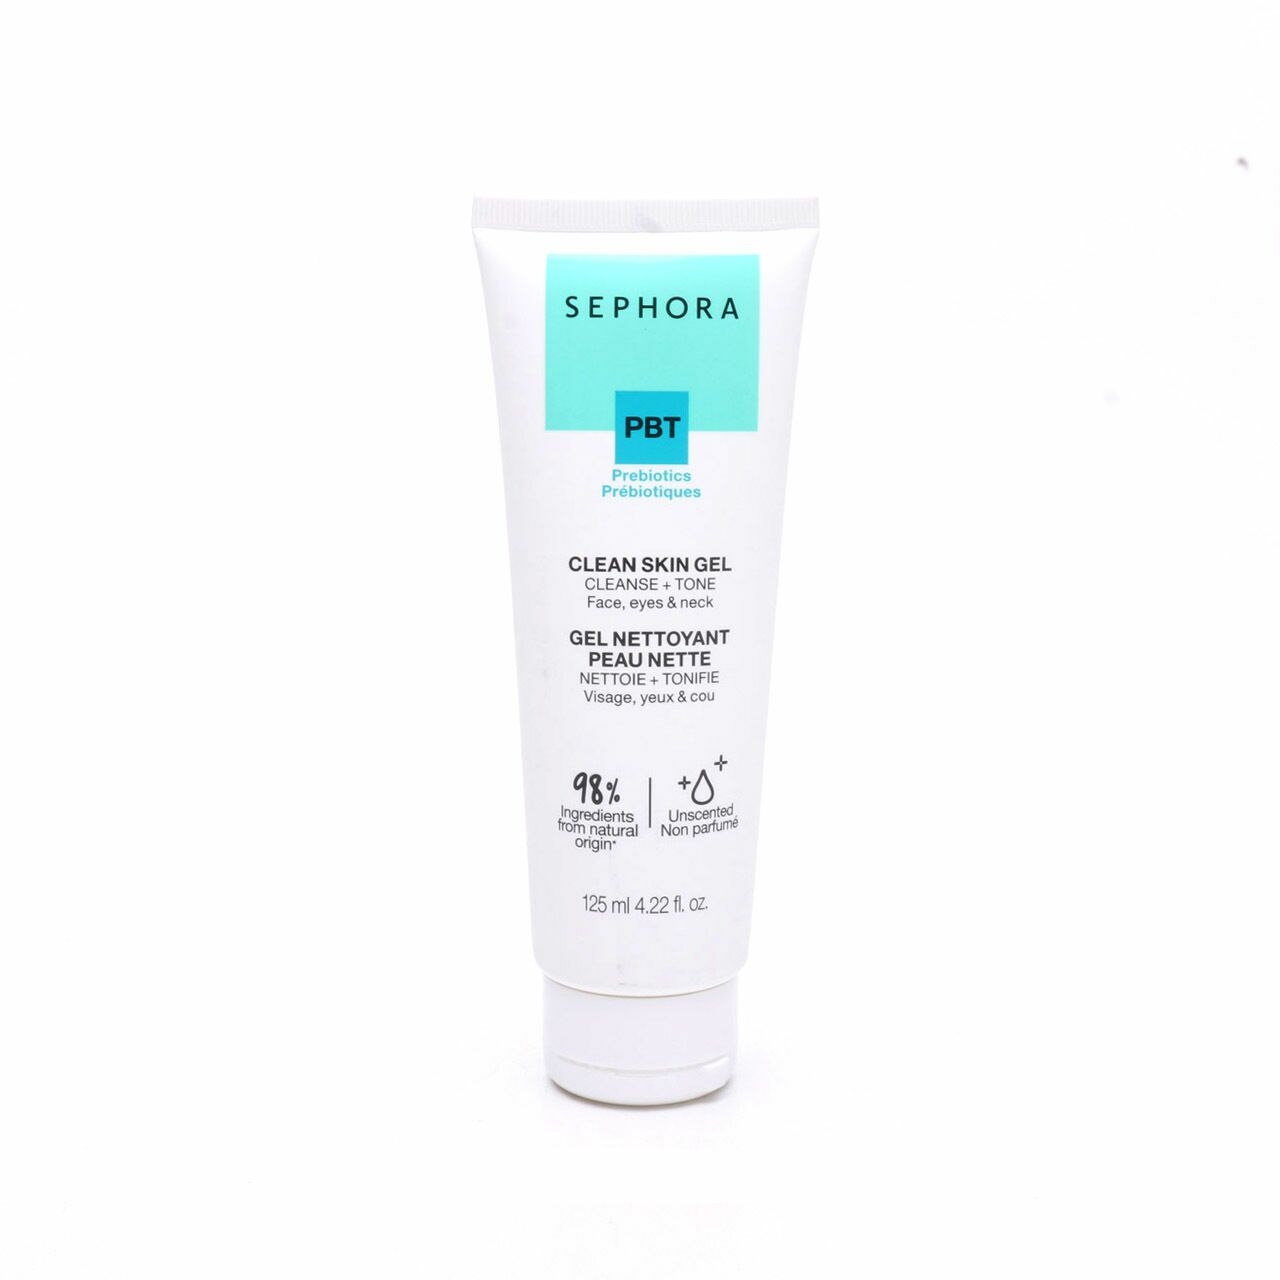 Sephora Clean Skin Gel Cleanser with Prebiotics Skin Care